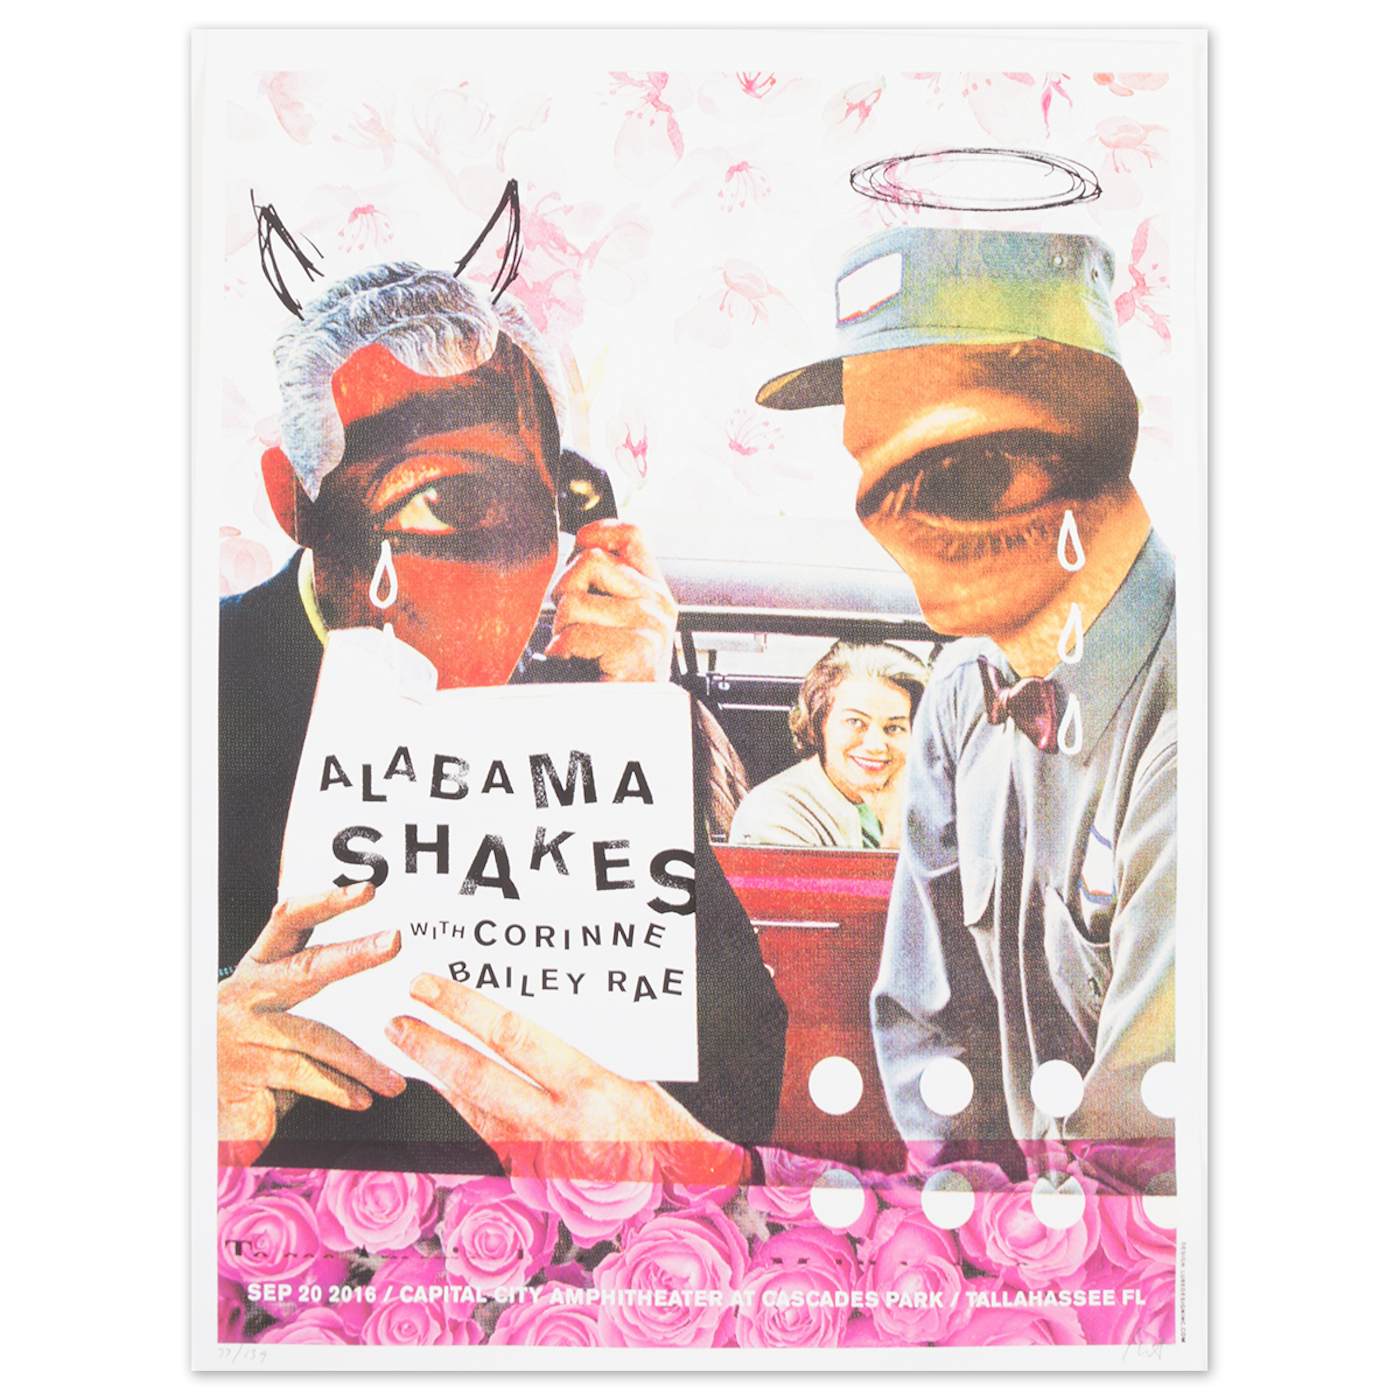 Alabama Shakes Show Poster - Sep. 20, 2016 Capital City Amphitheater, Cascades Park